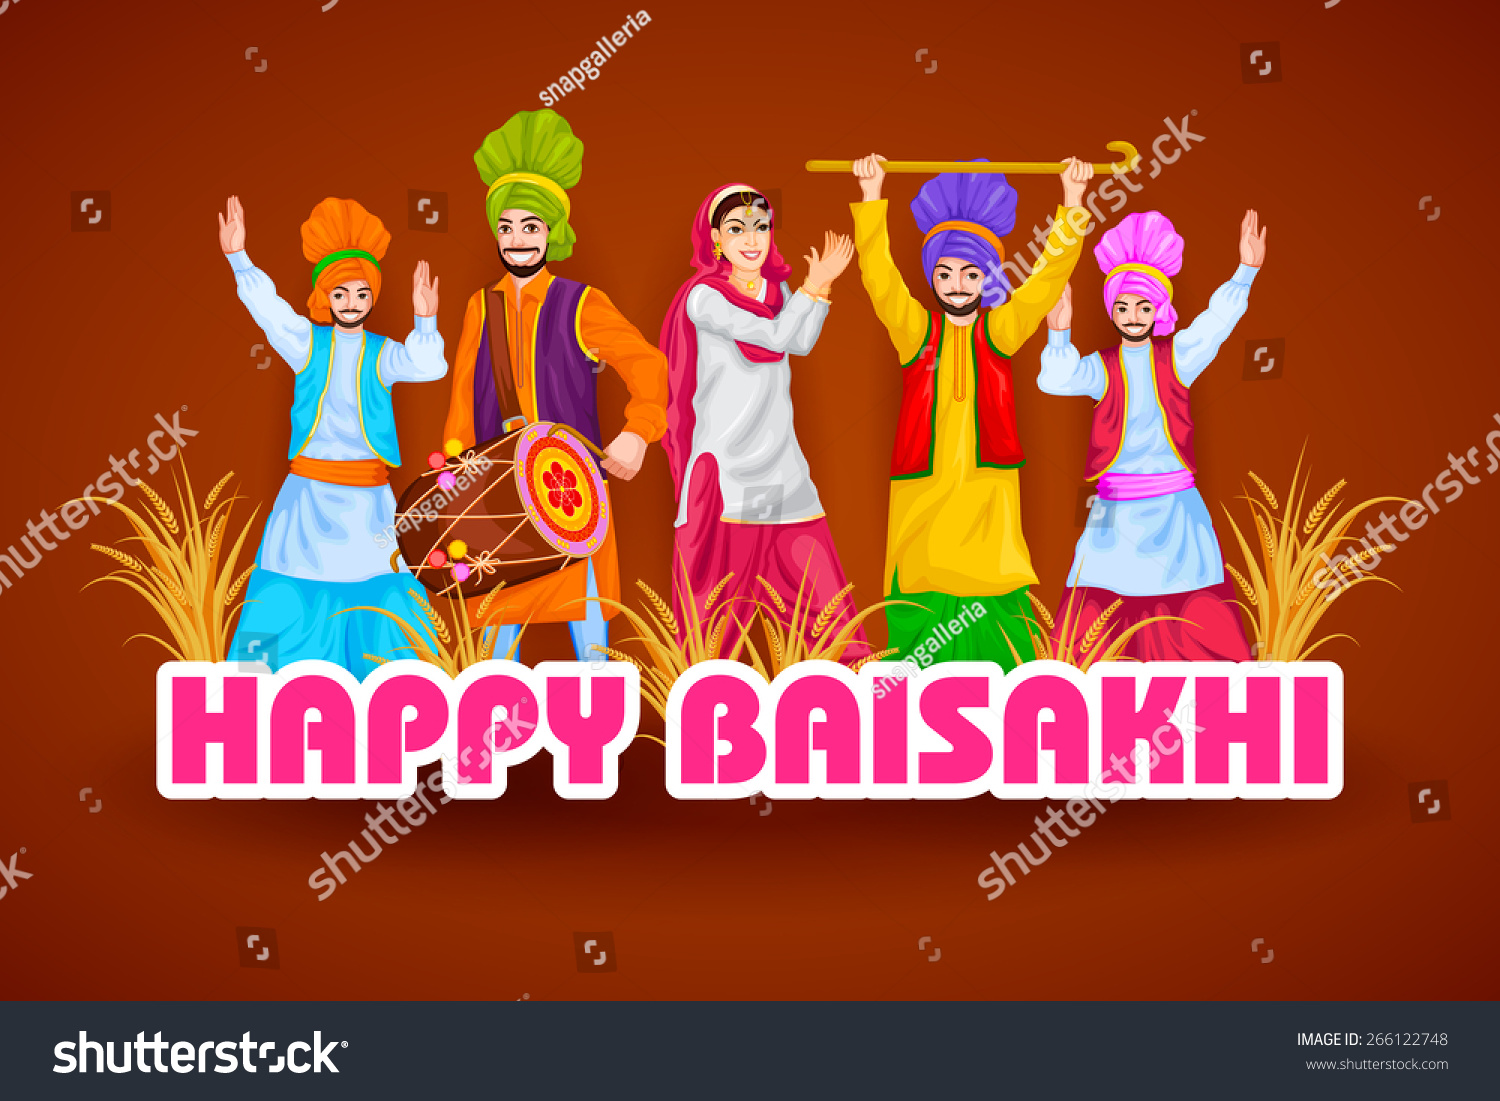 Easy To Edit Vector Illustration Of Happy Baisakhi Celebration ...